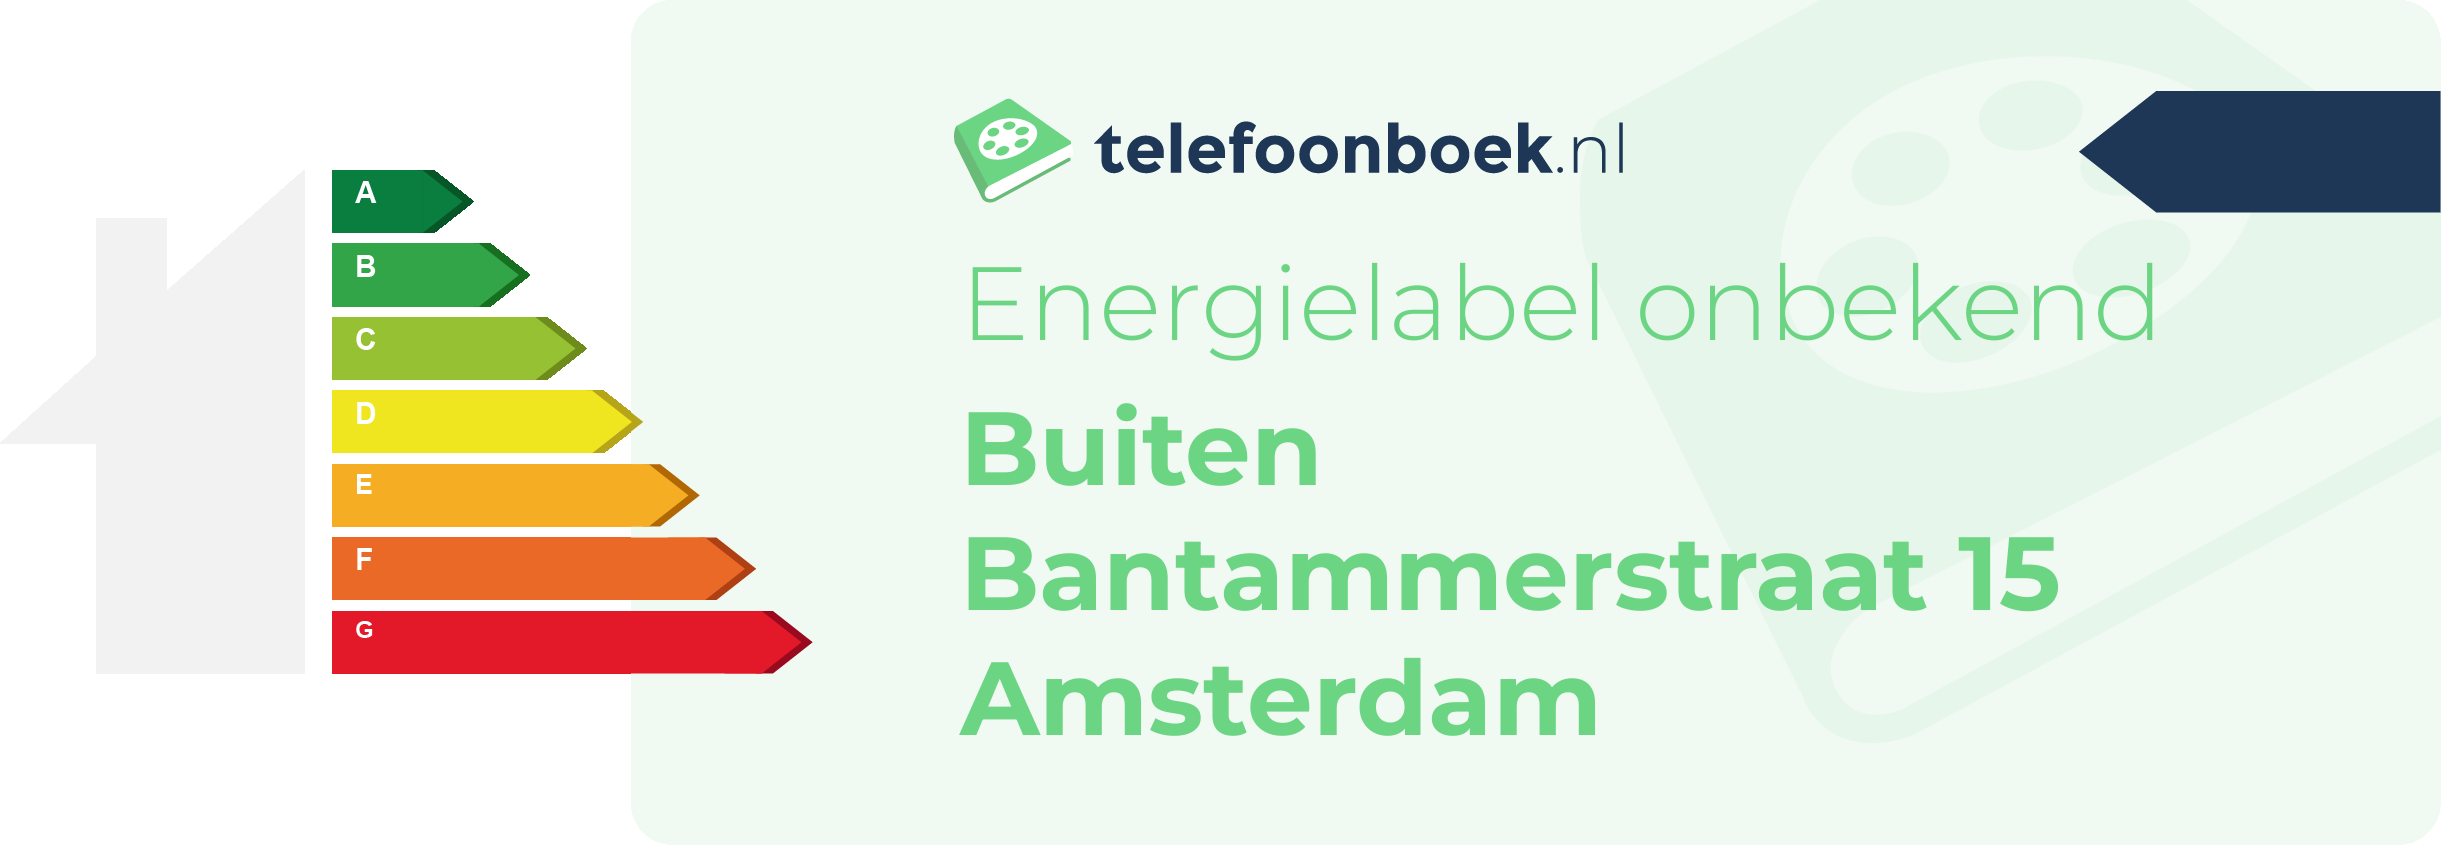 Energielabel Buiten Bantammerstraat 15 Amsterdam